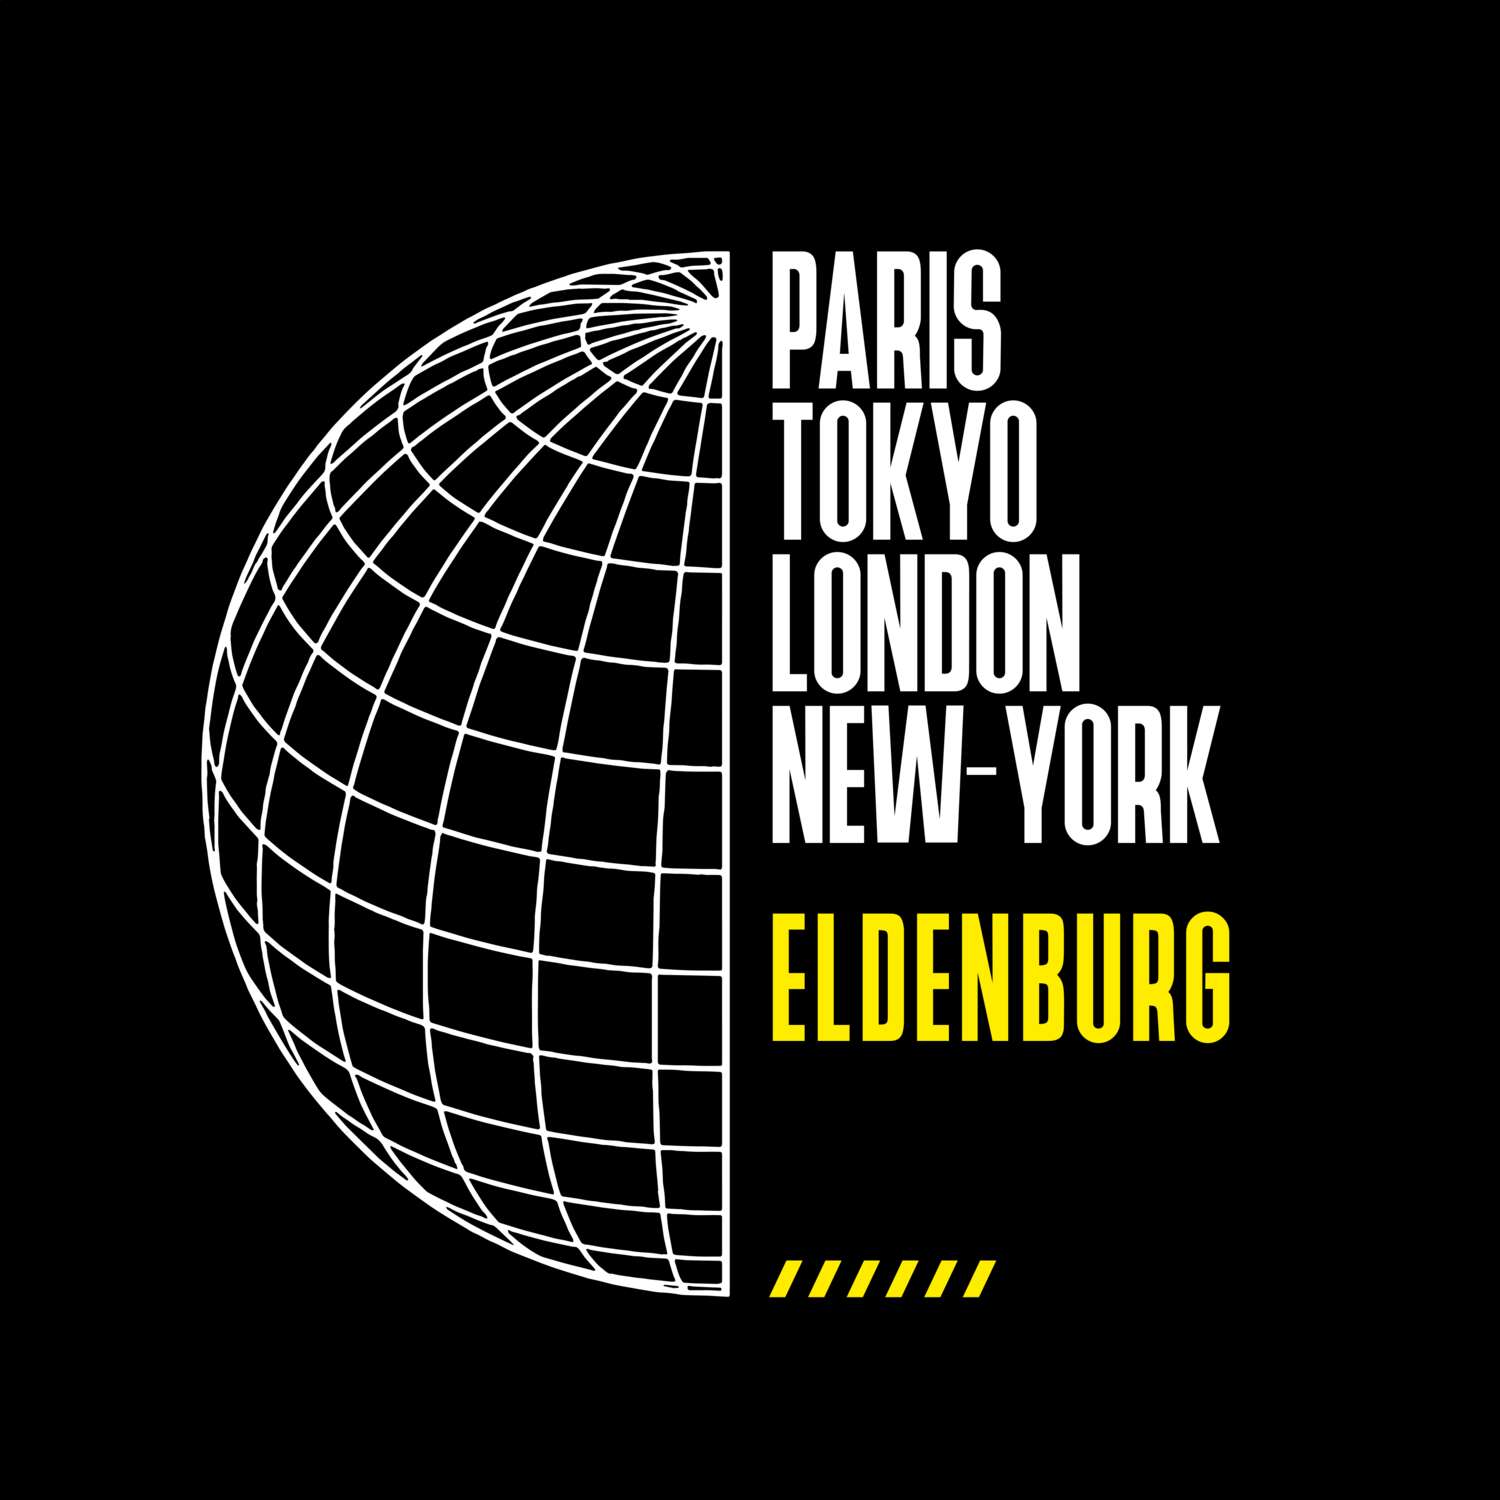 Eldenburg T-Shirt »Paris Tokyo London«